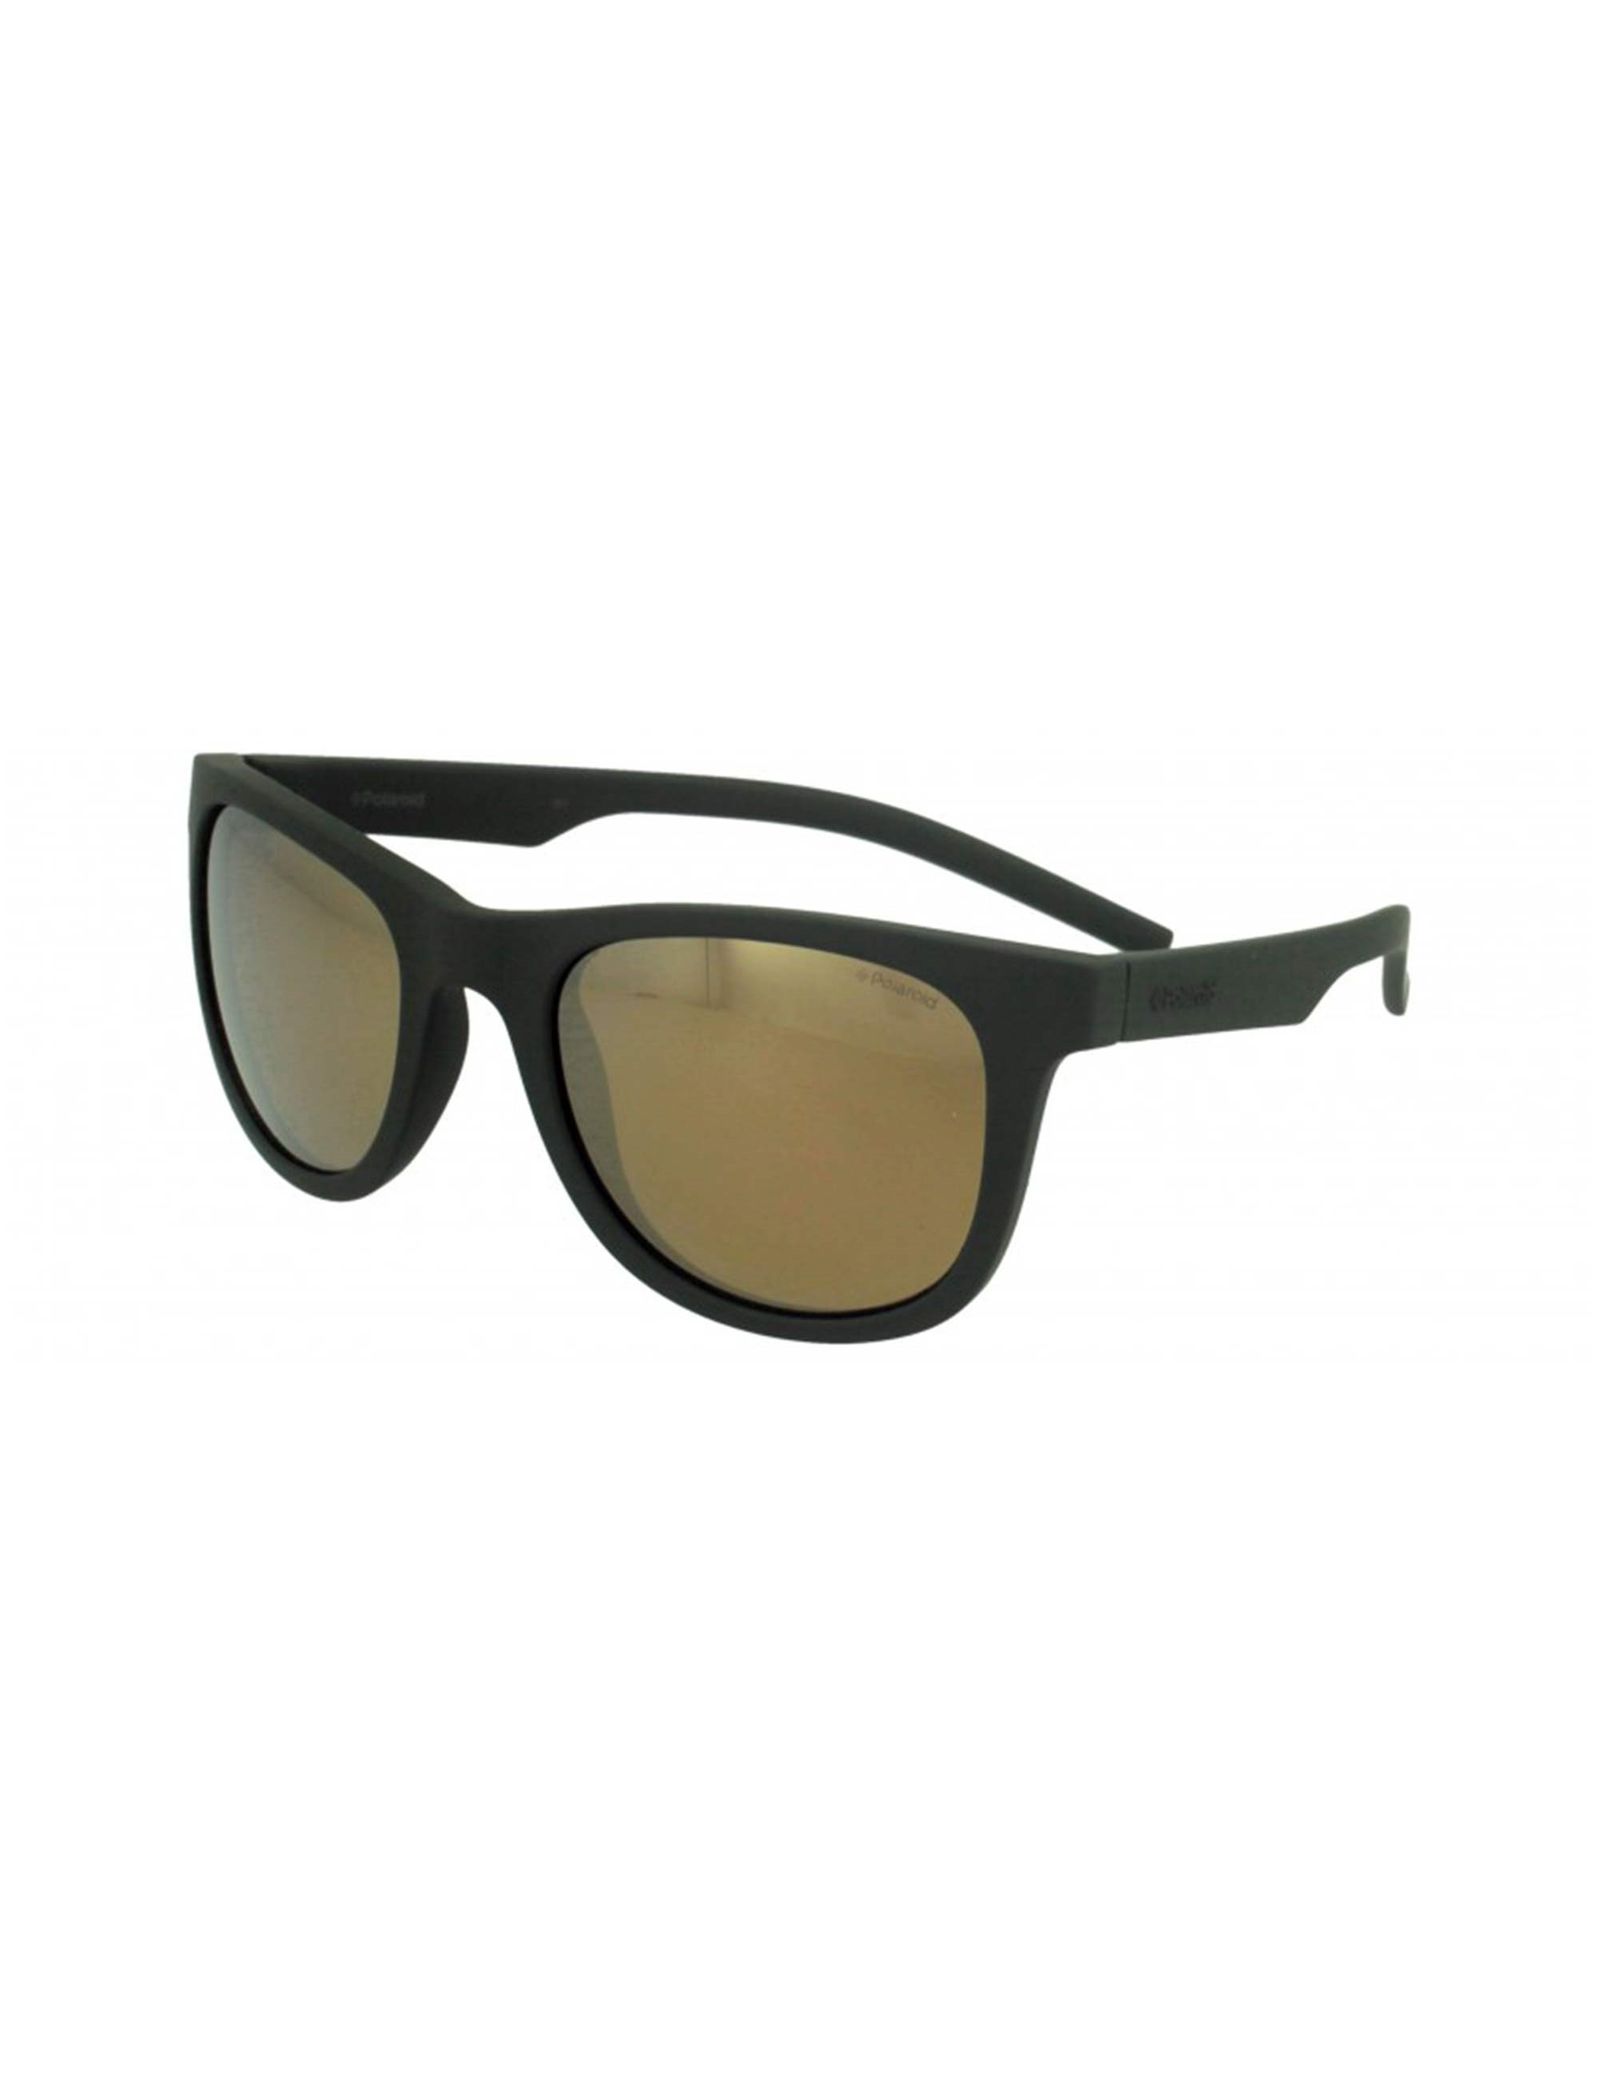 عینک آفتابی مستطیلی بزرگسال - پولاروید - سبز - 5